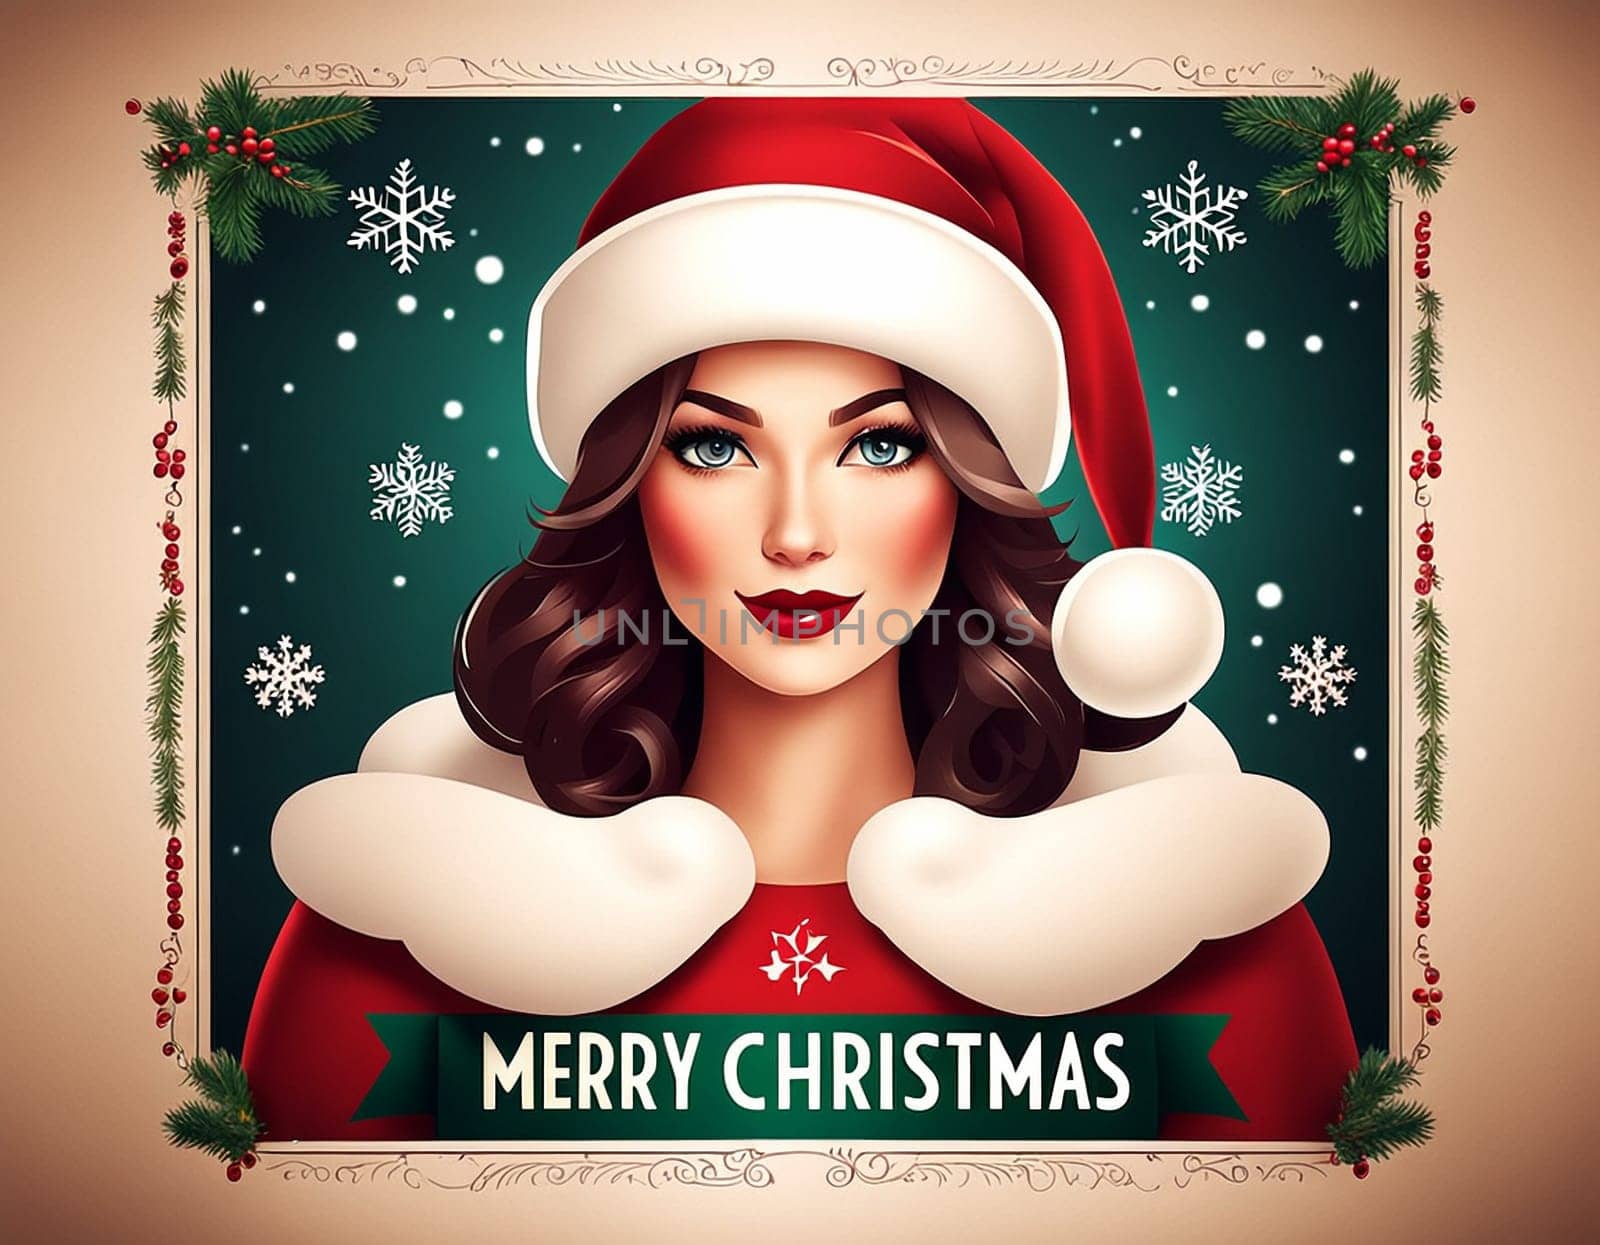 Beautiful Christmas card. High quality illustration